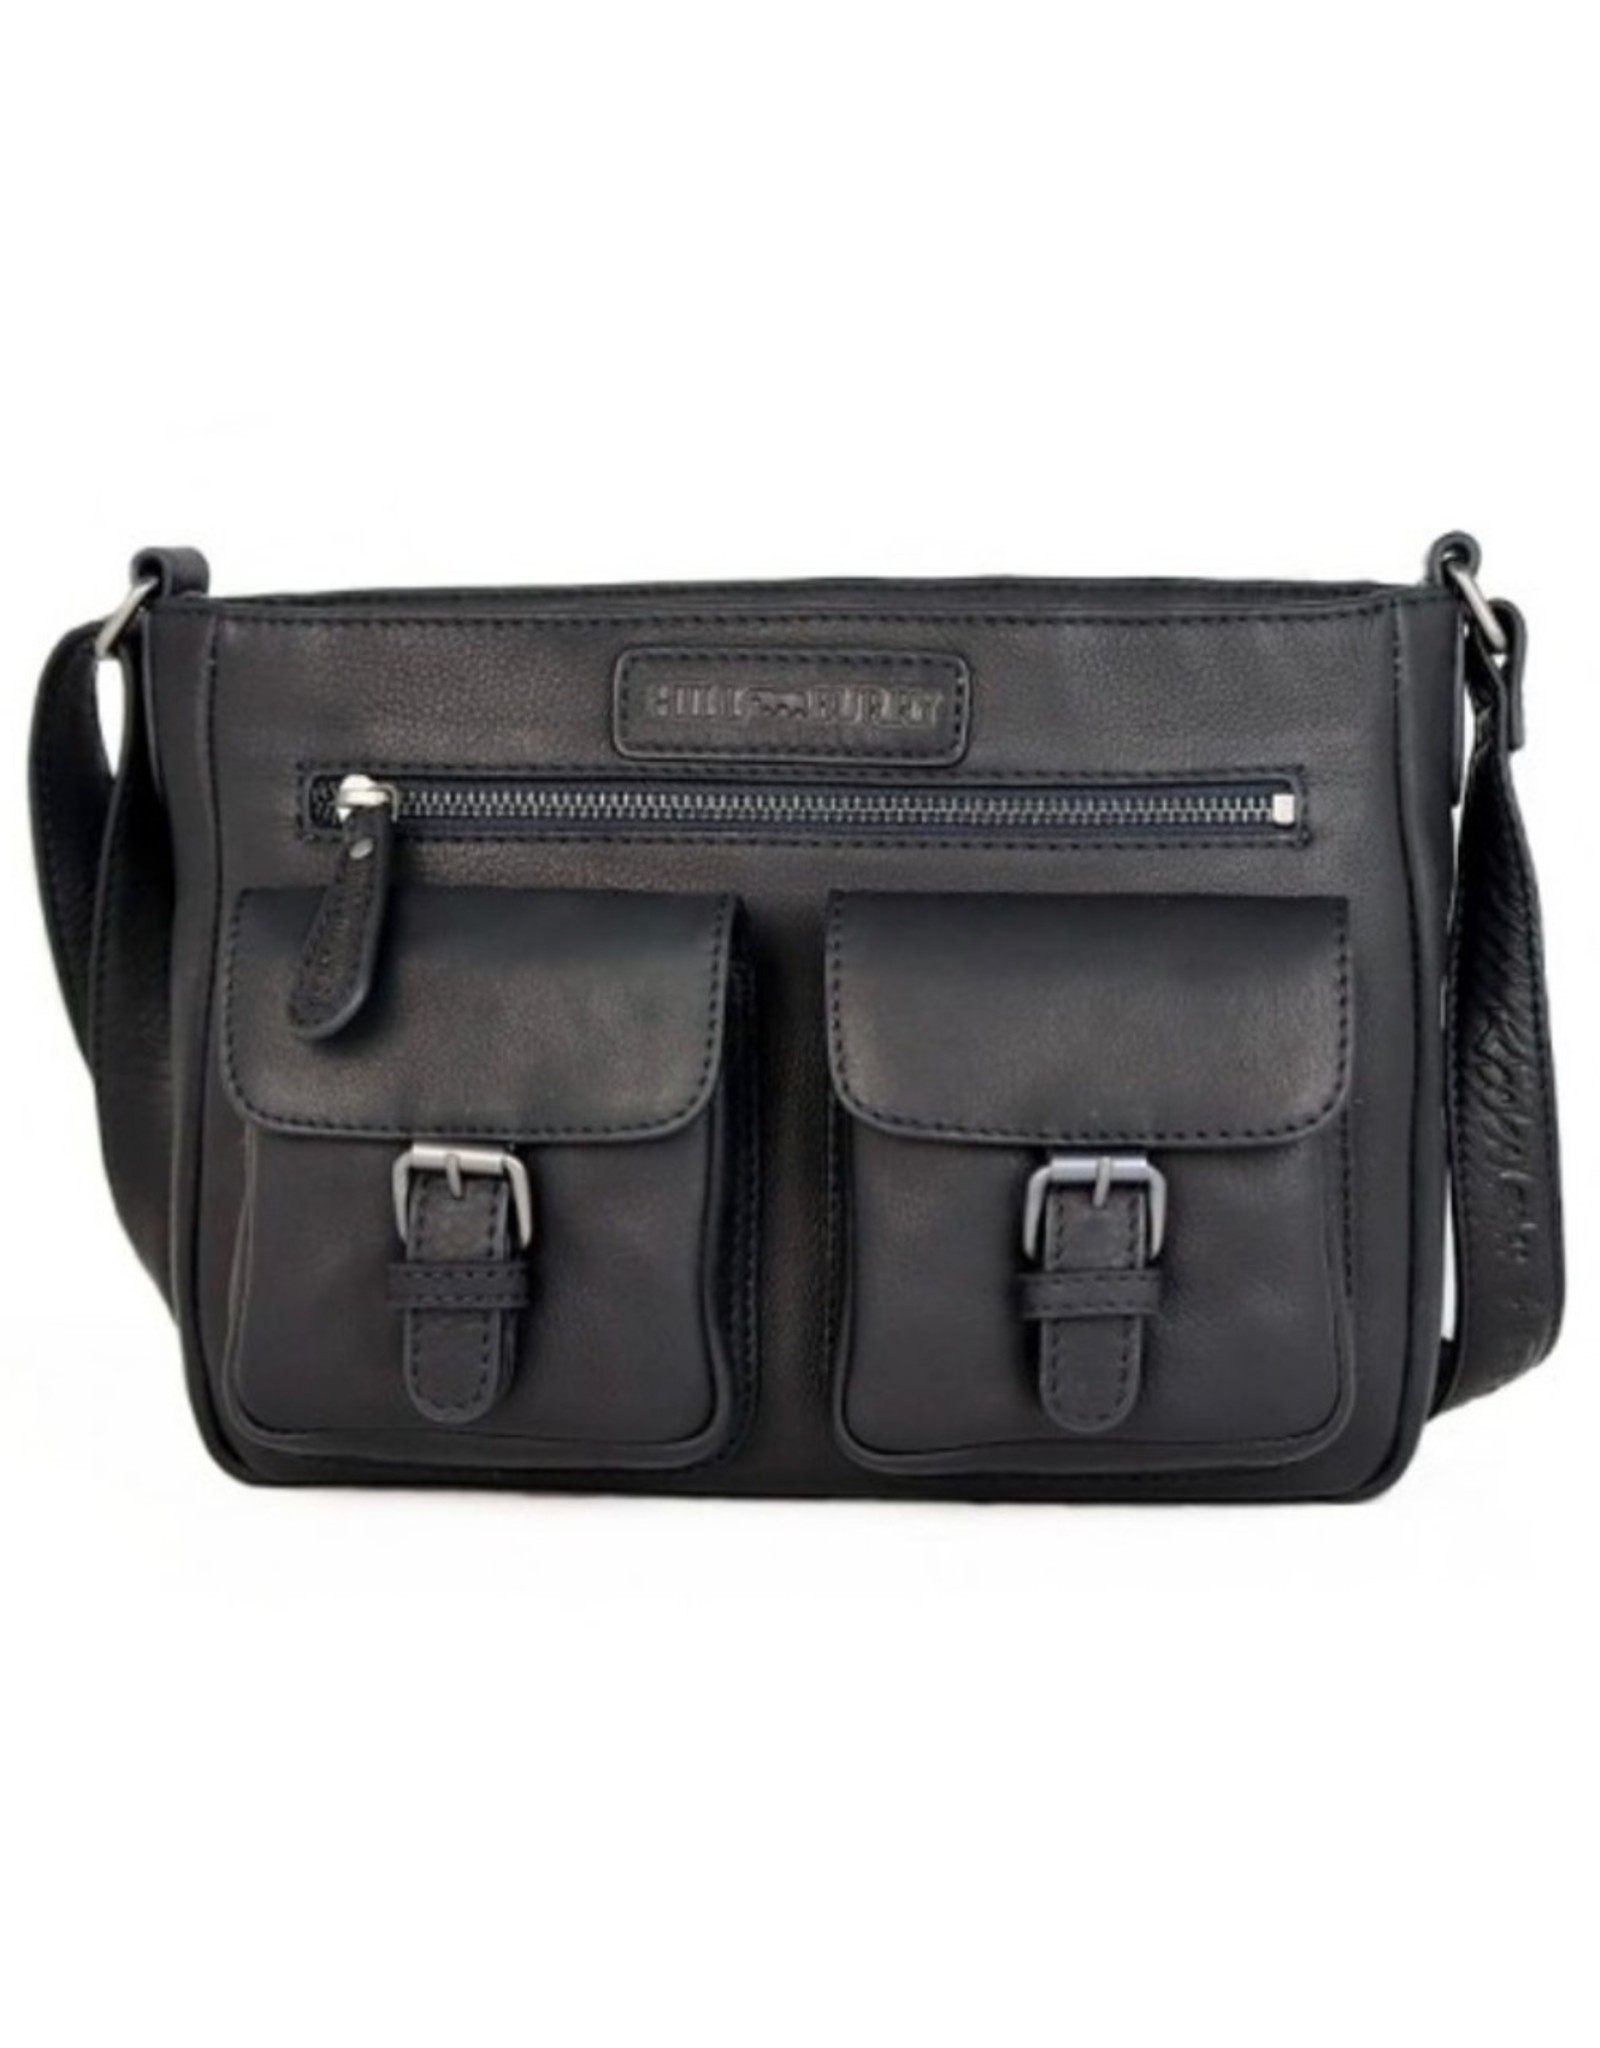 HillBurry Leather Shoulder bags  Leather crossbody bags - HillBurry Leather Shoulder Bag with multiple pockets black